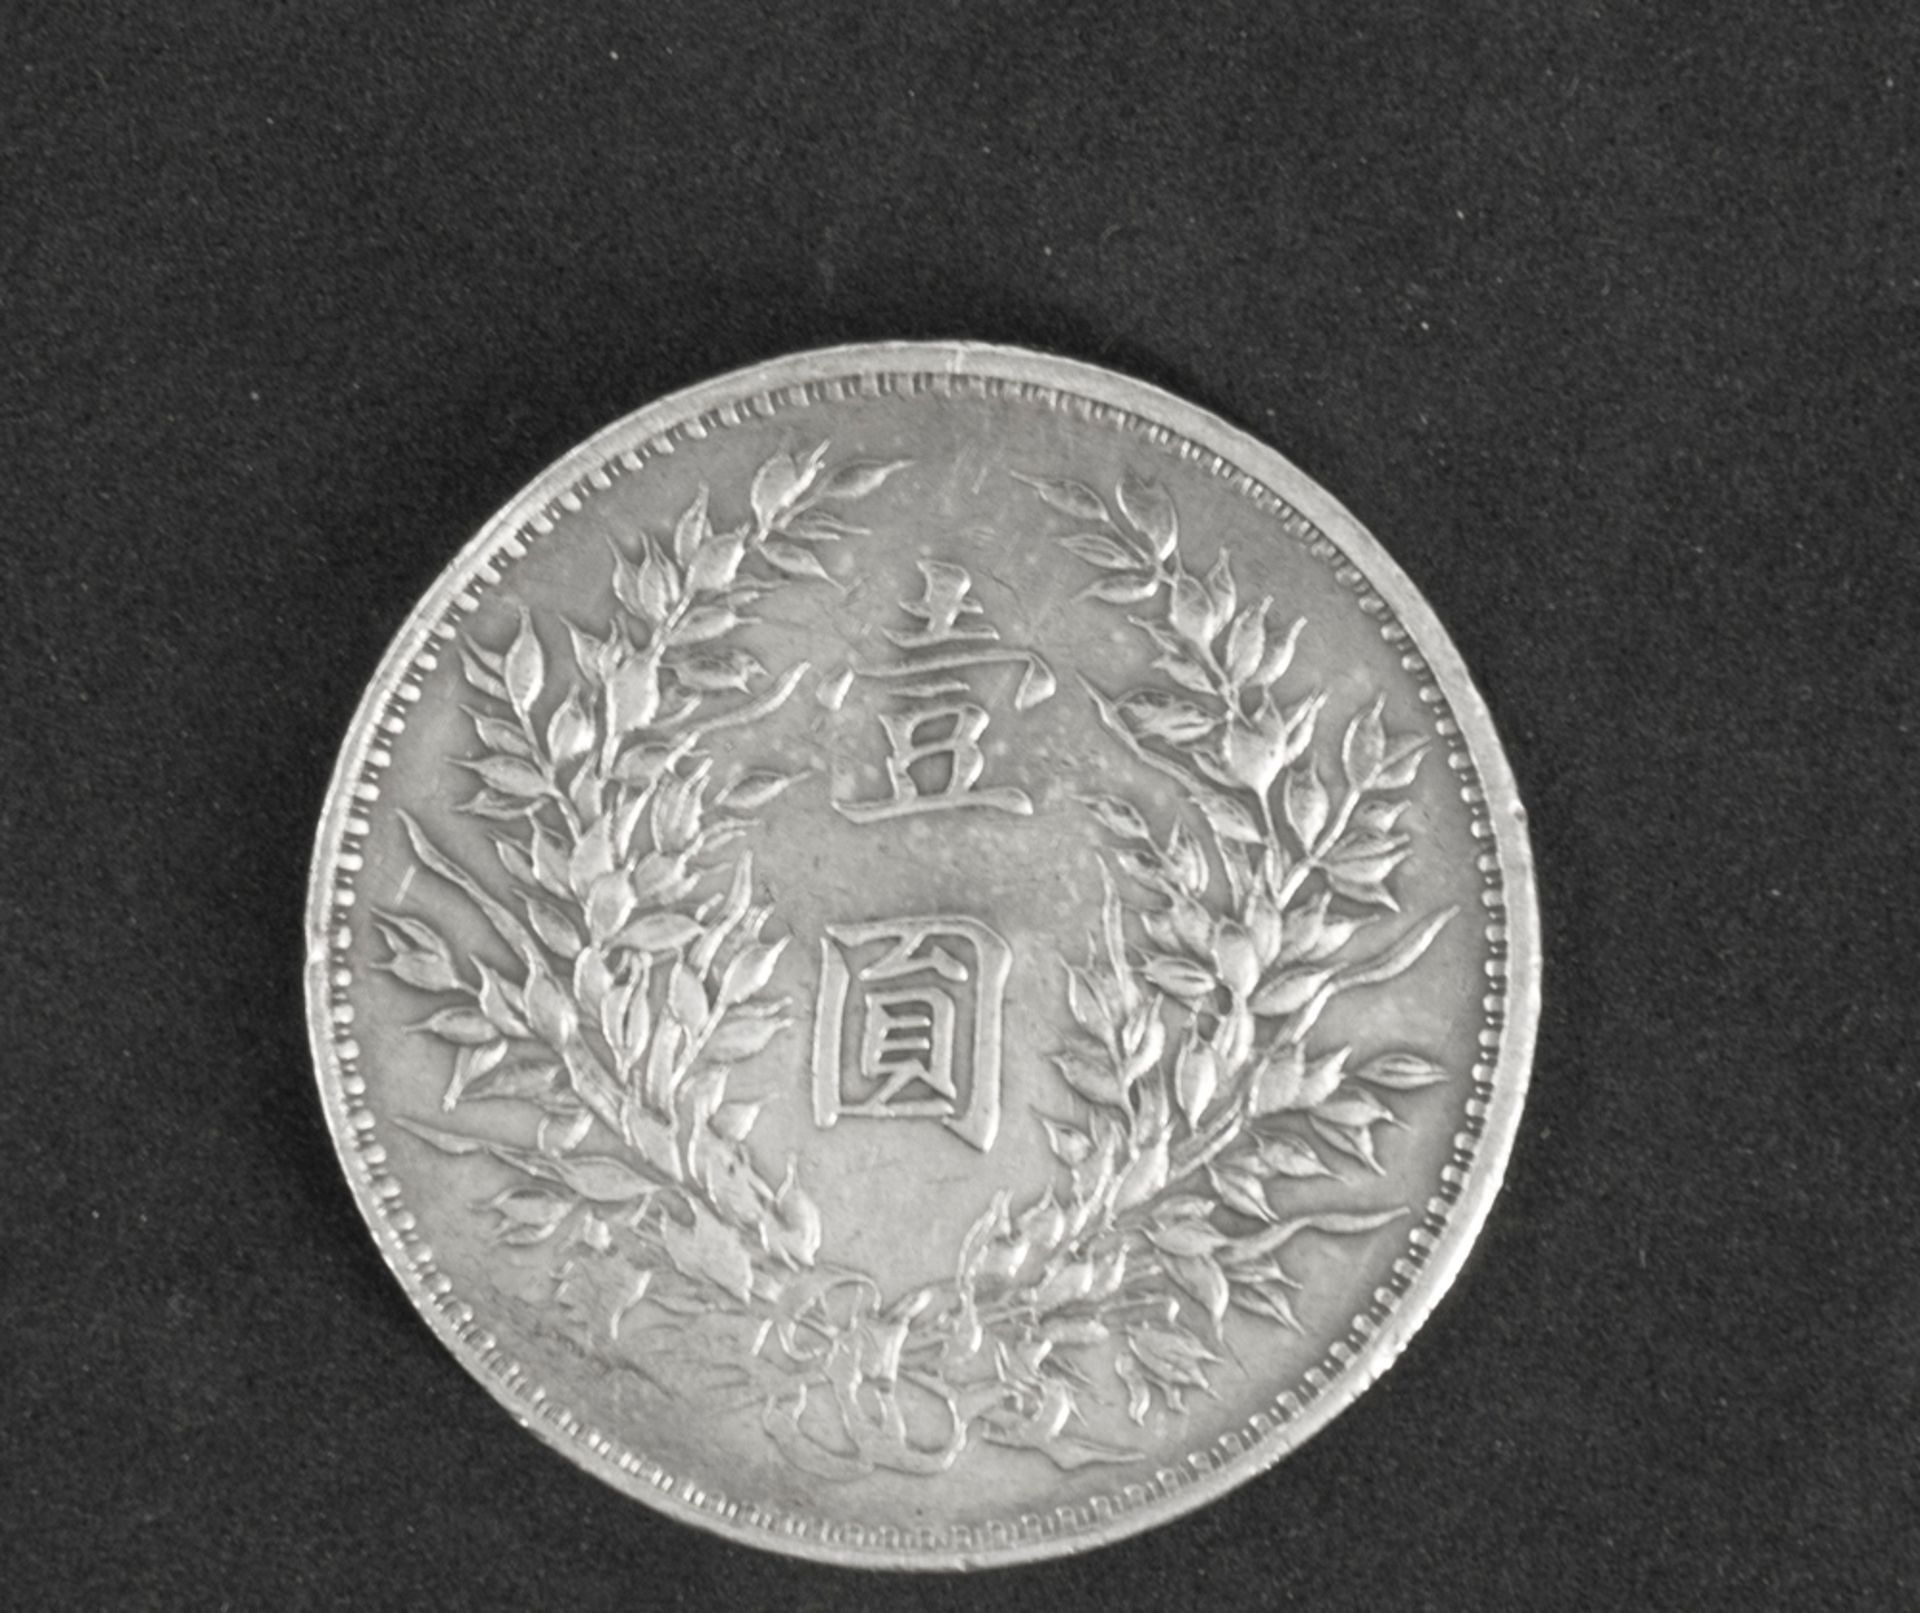 China Republik, 1 Dollar "Shih Kai (Fat Man). Silber. Erhaltung: ss. - Bild 2 aus 2